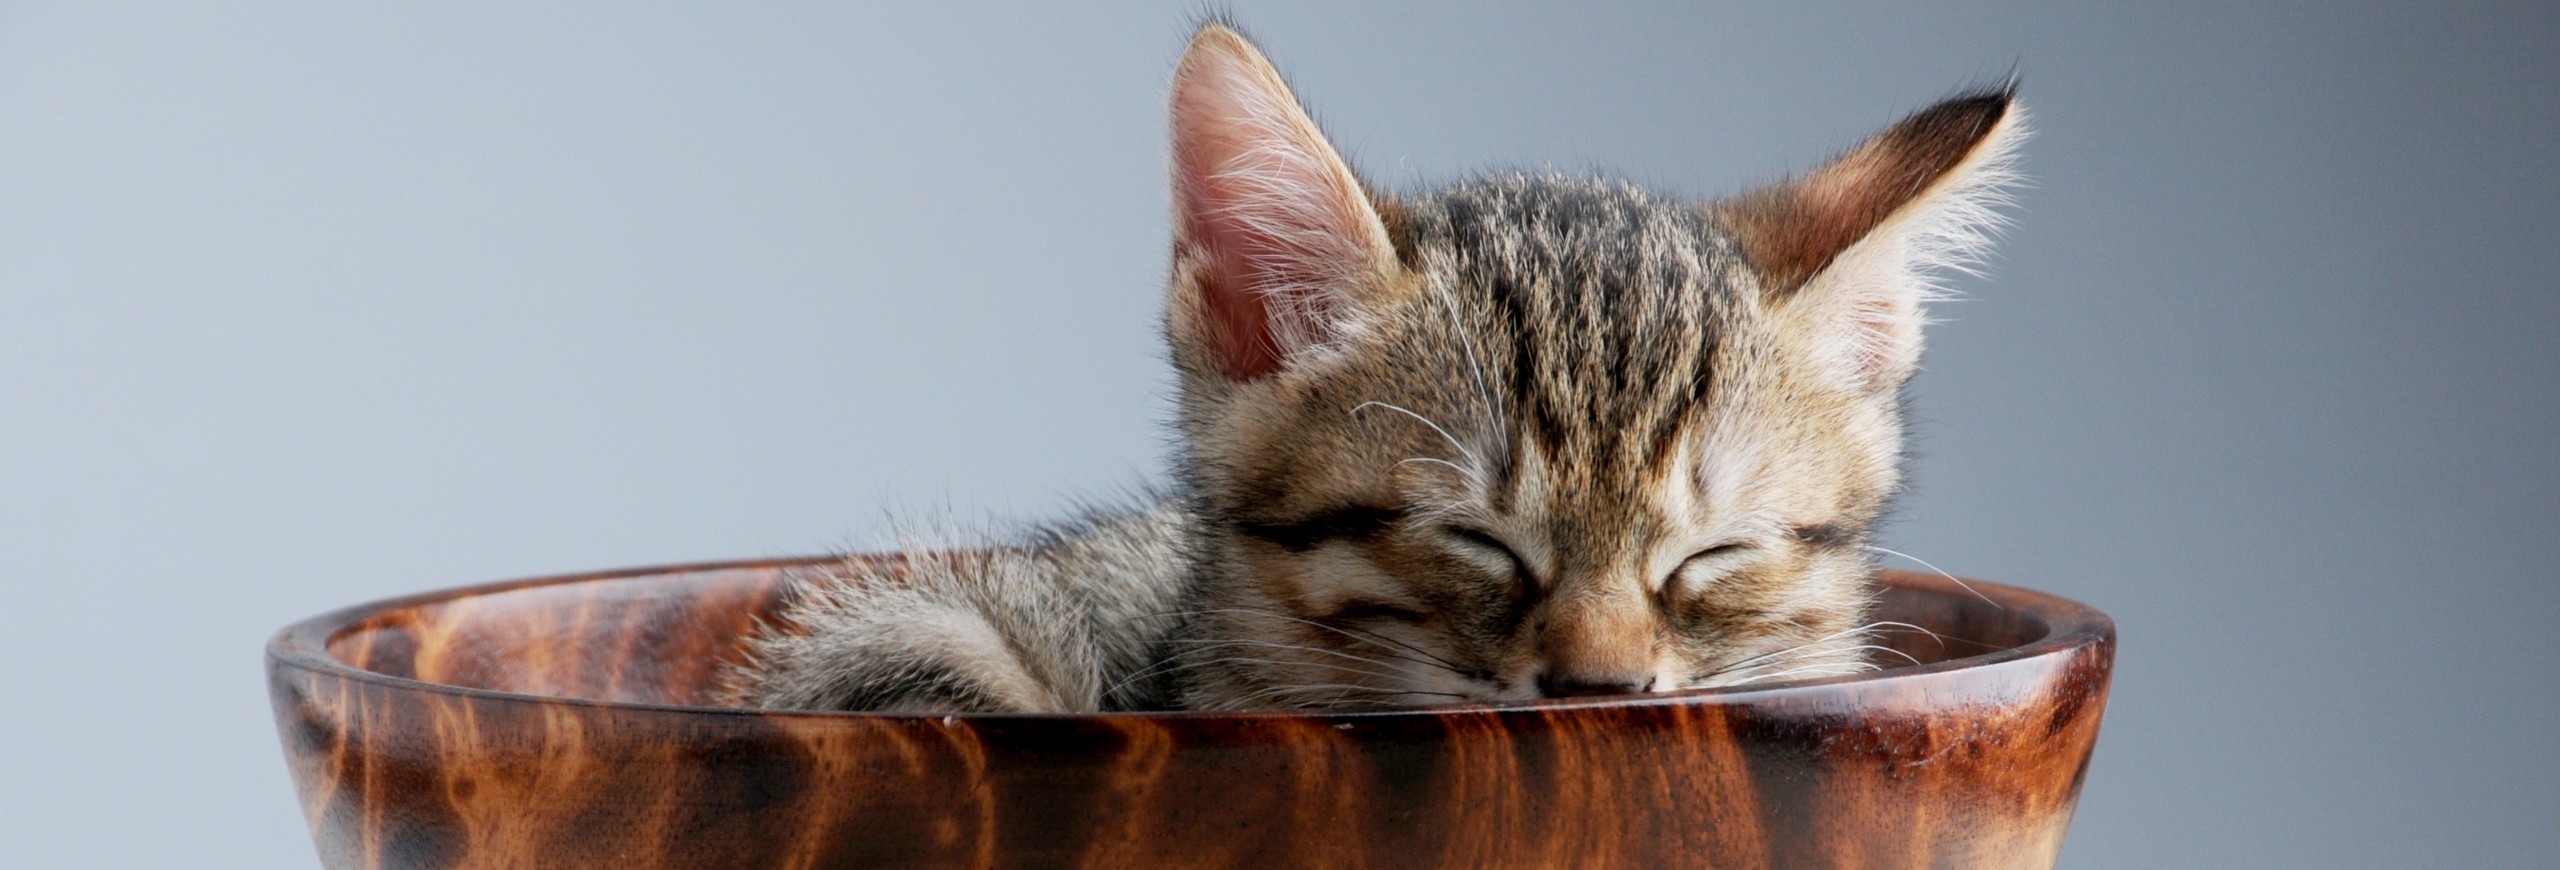 cat sleeping in a brown bowl